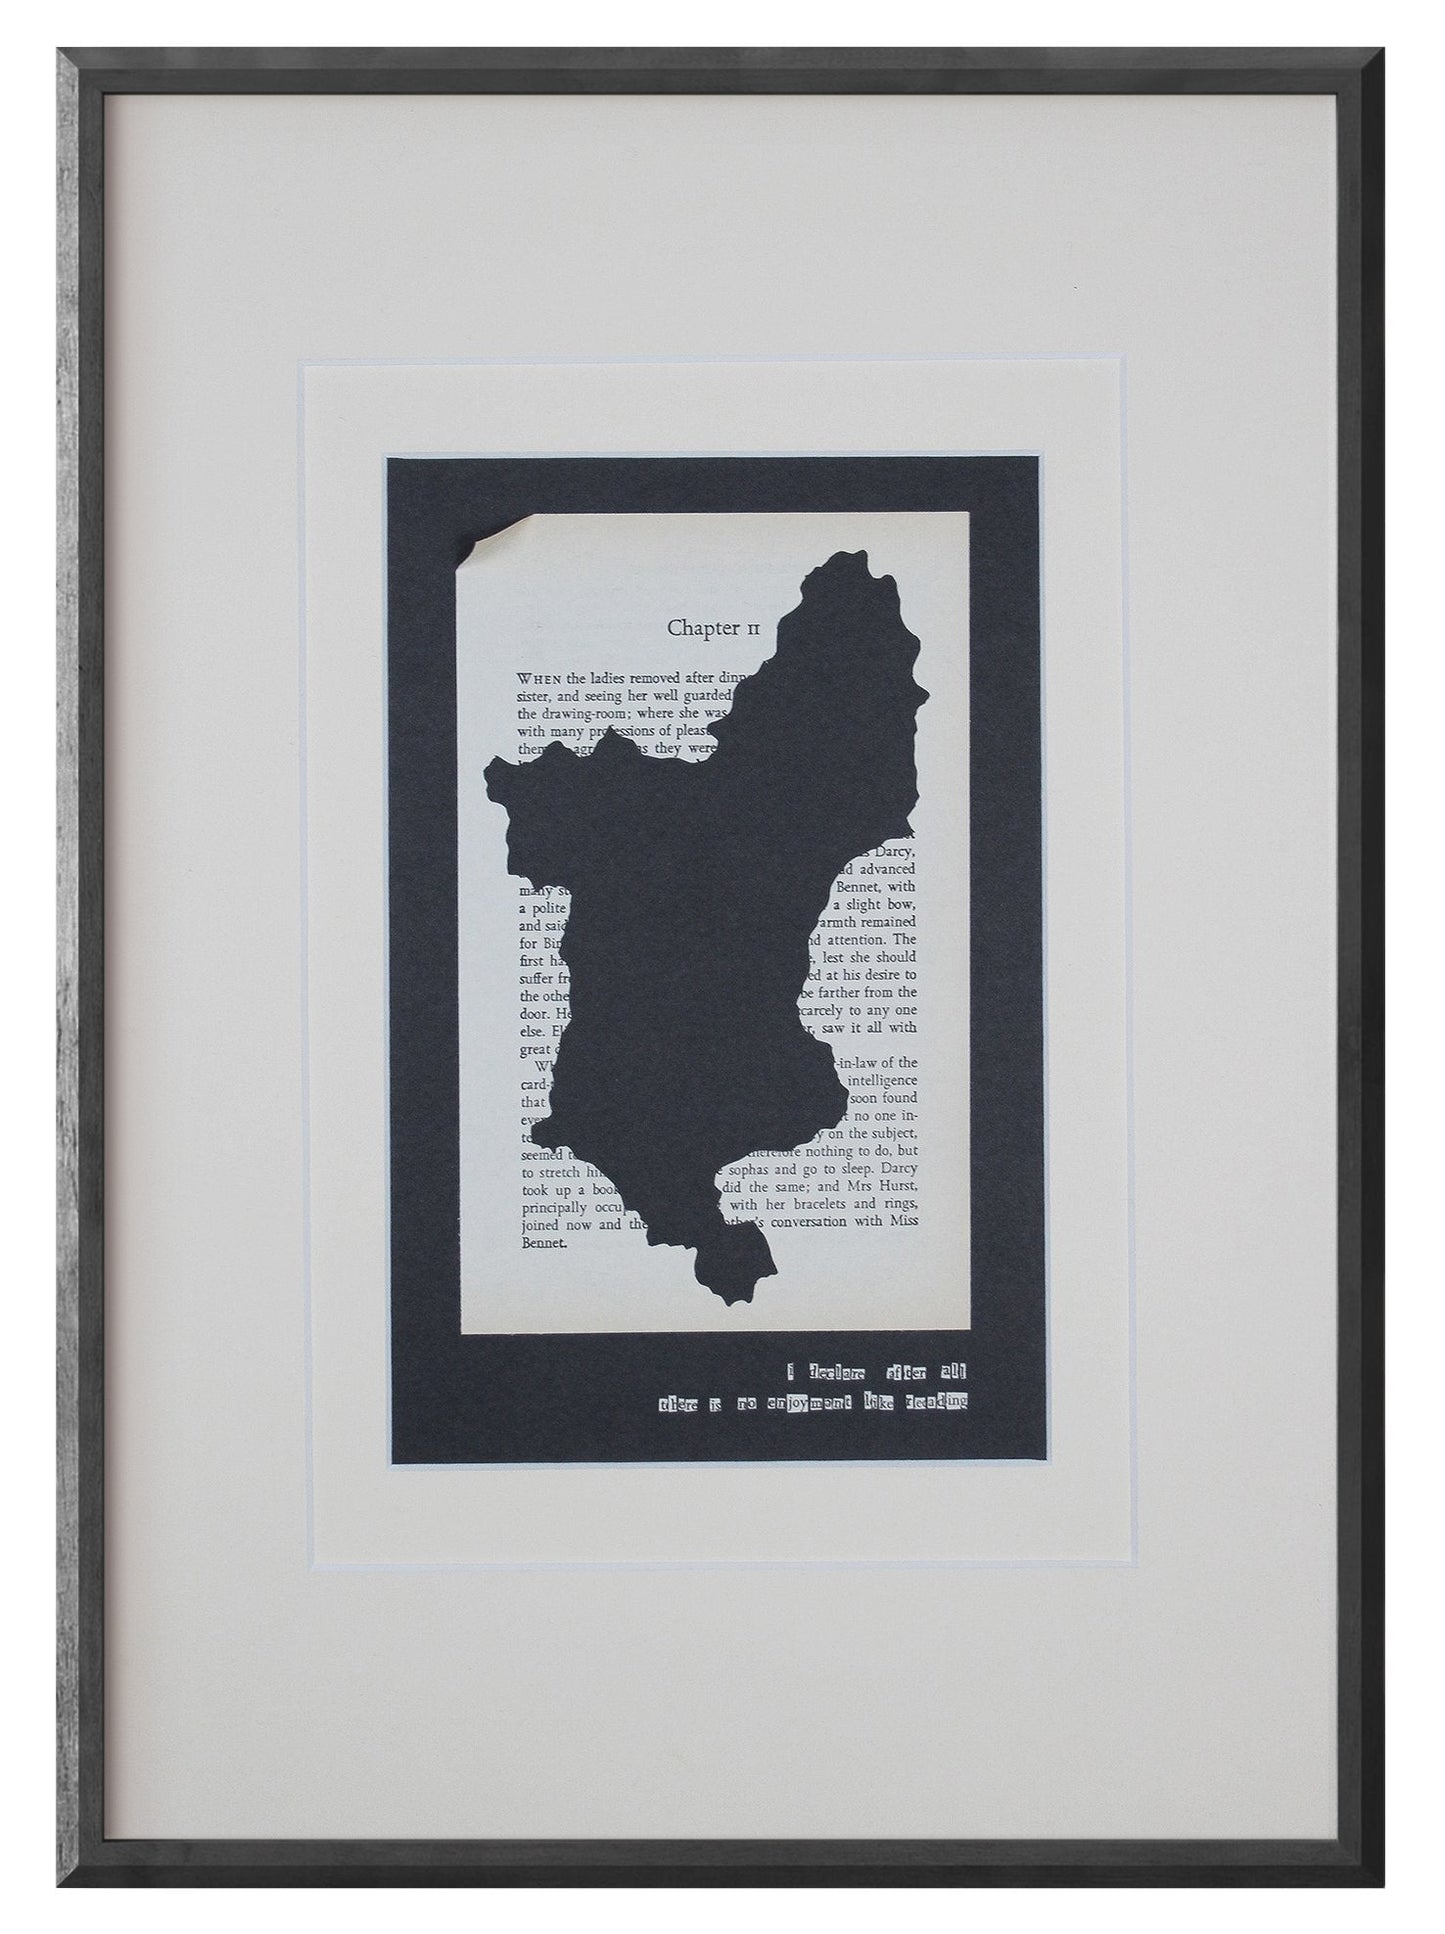 Pride & Prejudice "Derbyshire Joy of Reading 99" | Double Paper Cut | Limited Edition 1 of 1 - James Voce // artist